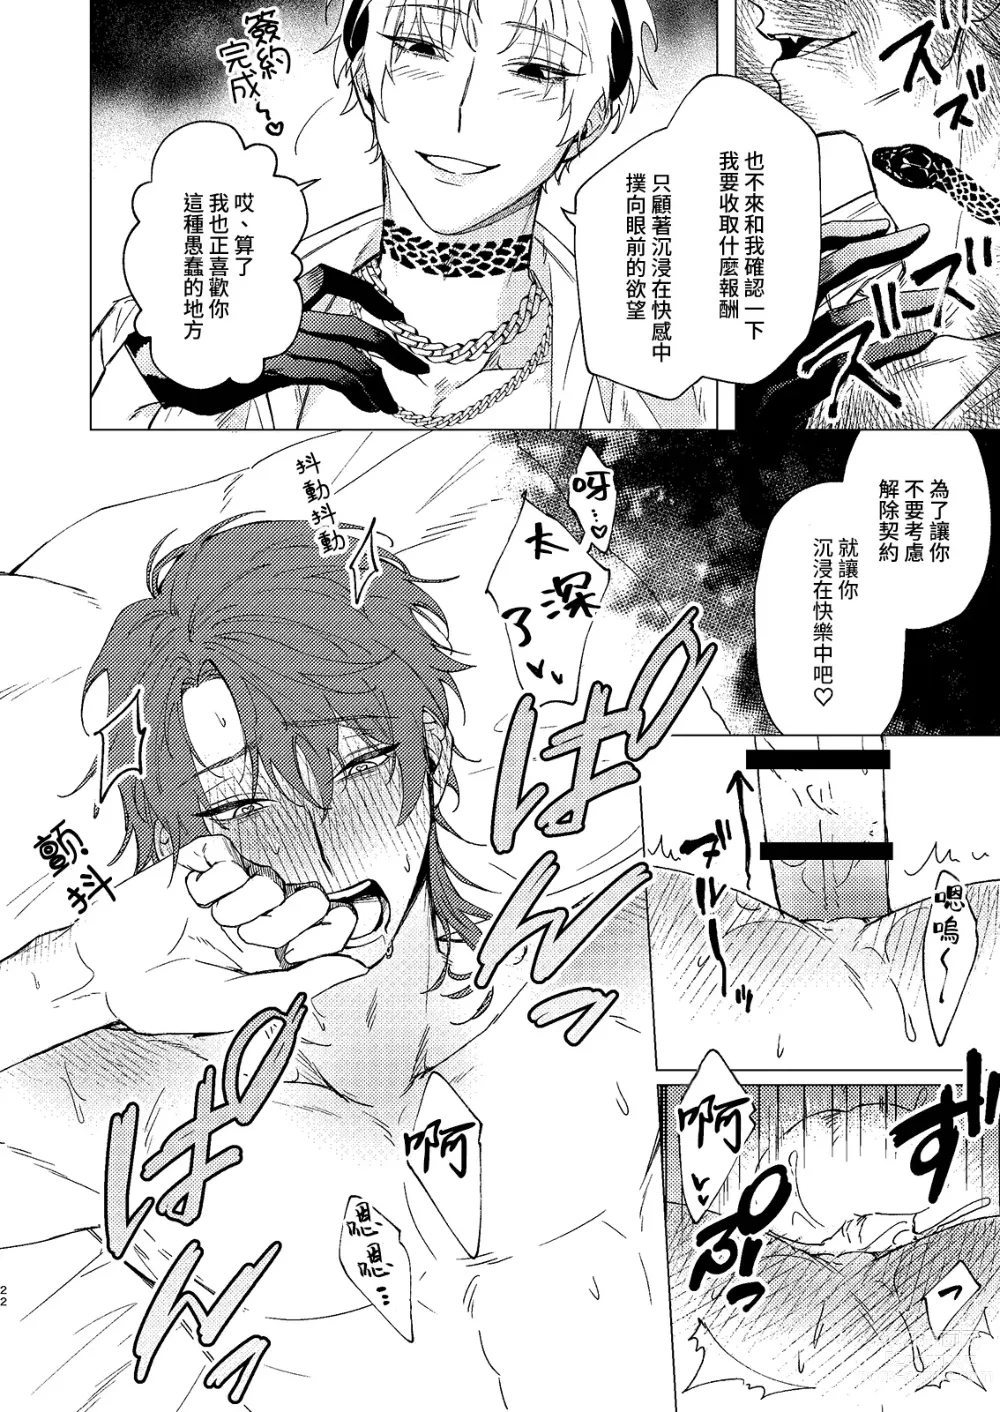 Page 21 of manga 多多调教我吧淫魔大人1